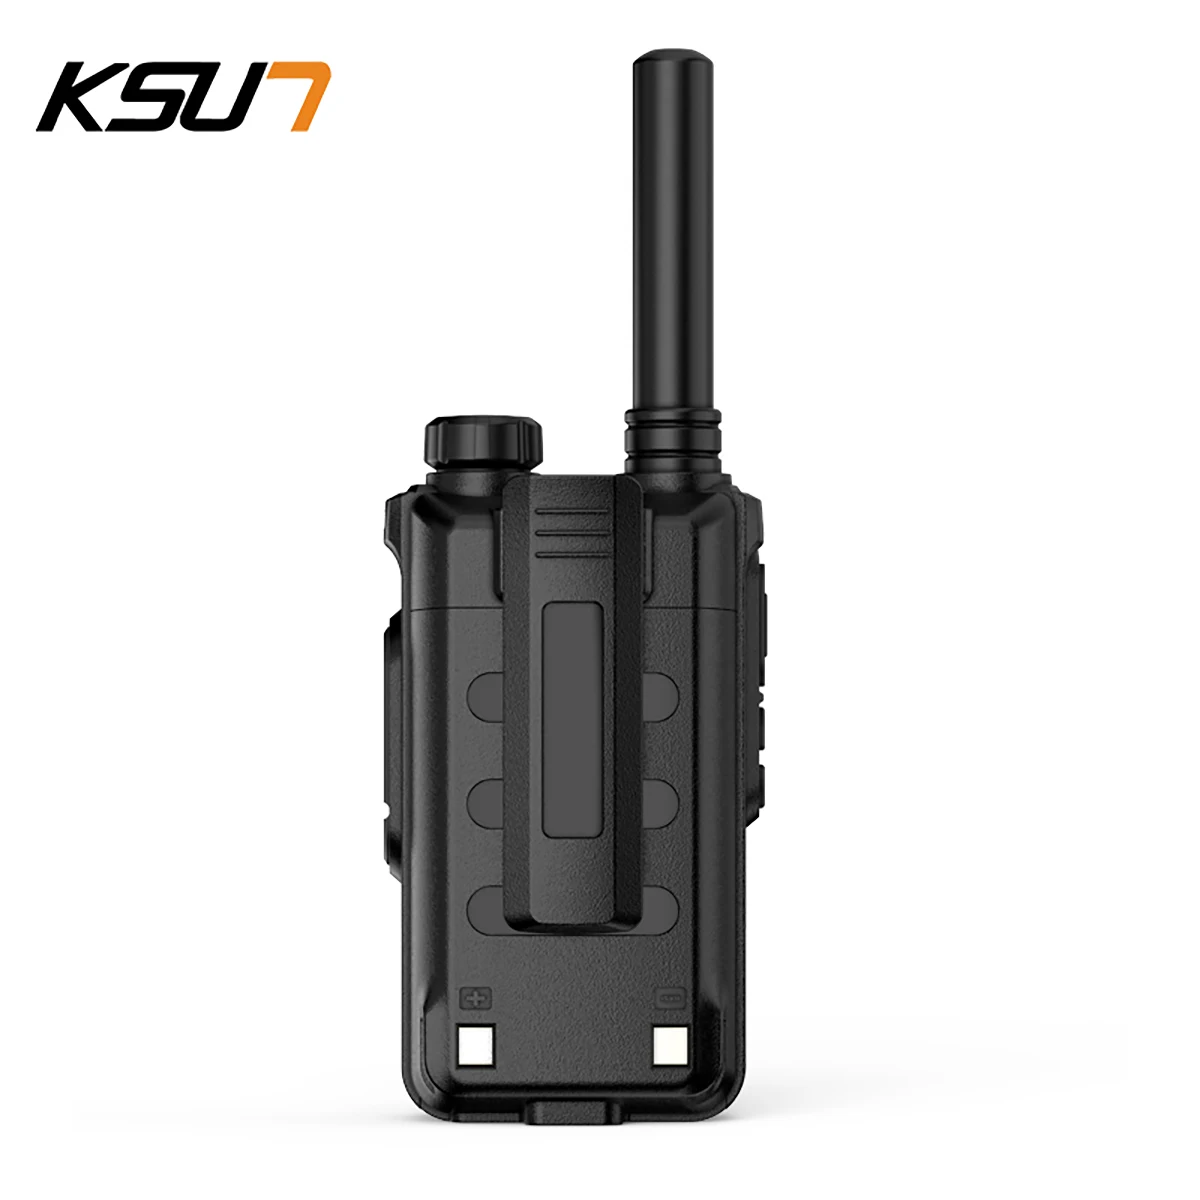 KSUT DMR Radio Walkie Talkie Digital Ham Two Way Radio Station Portable 3 Watt UHF Professional Transceiver Wireless Device